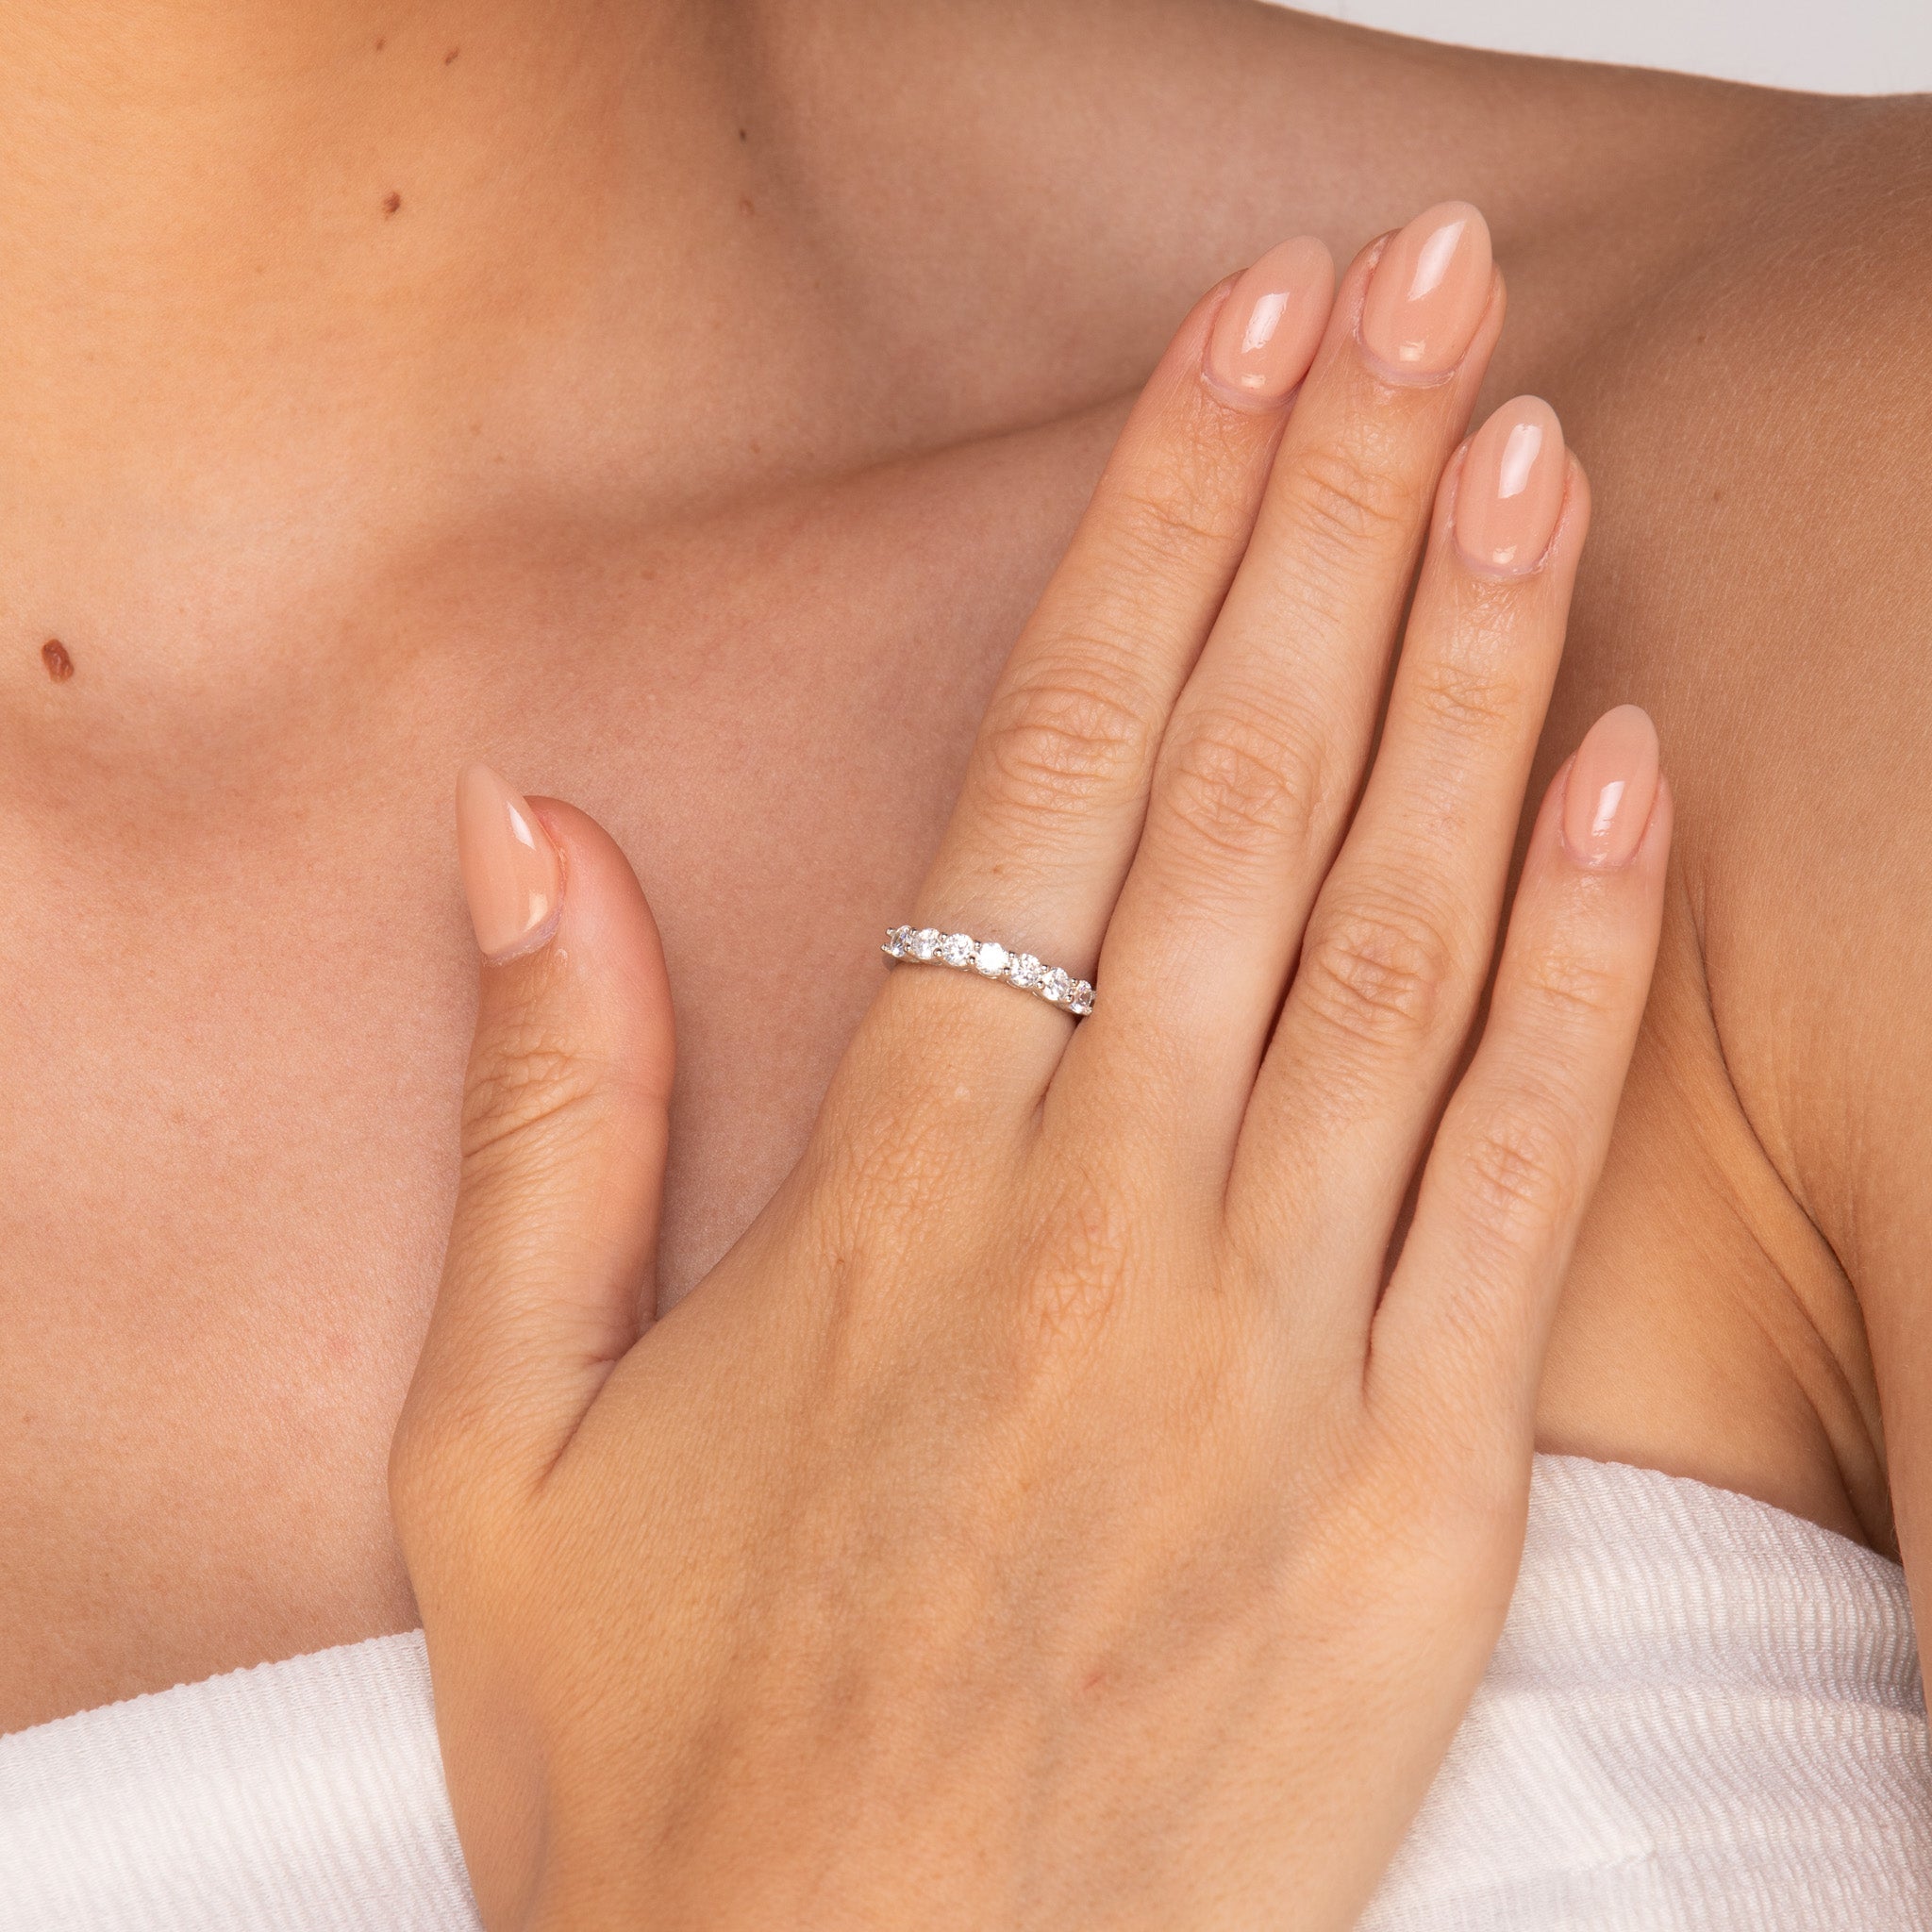 The Zara Sapphire Engagement Wedding Ring